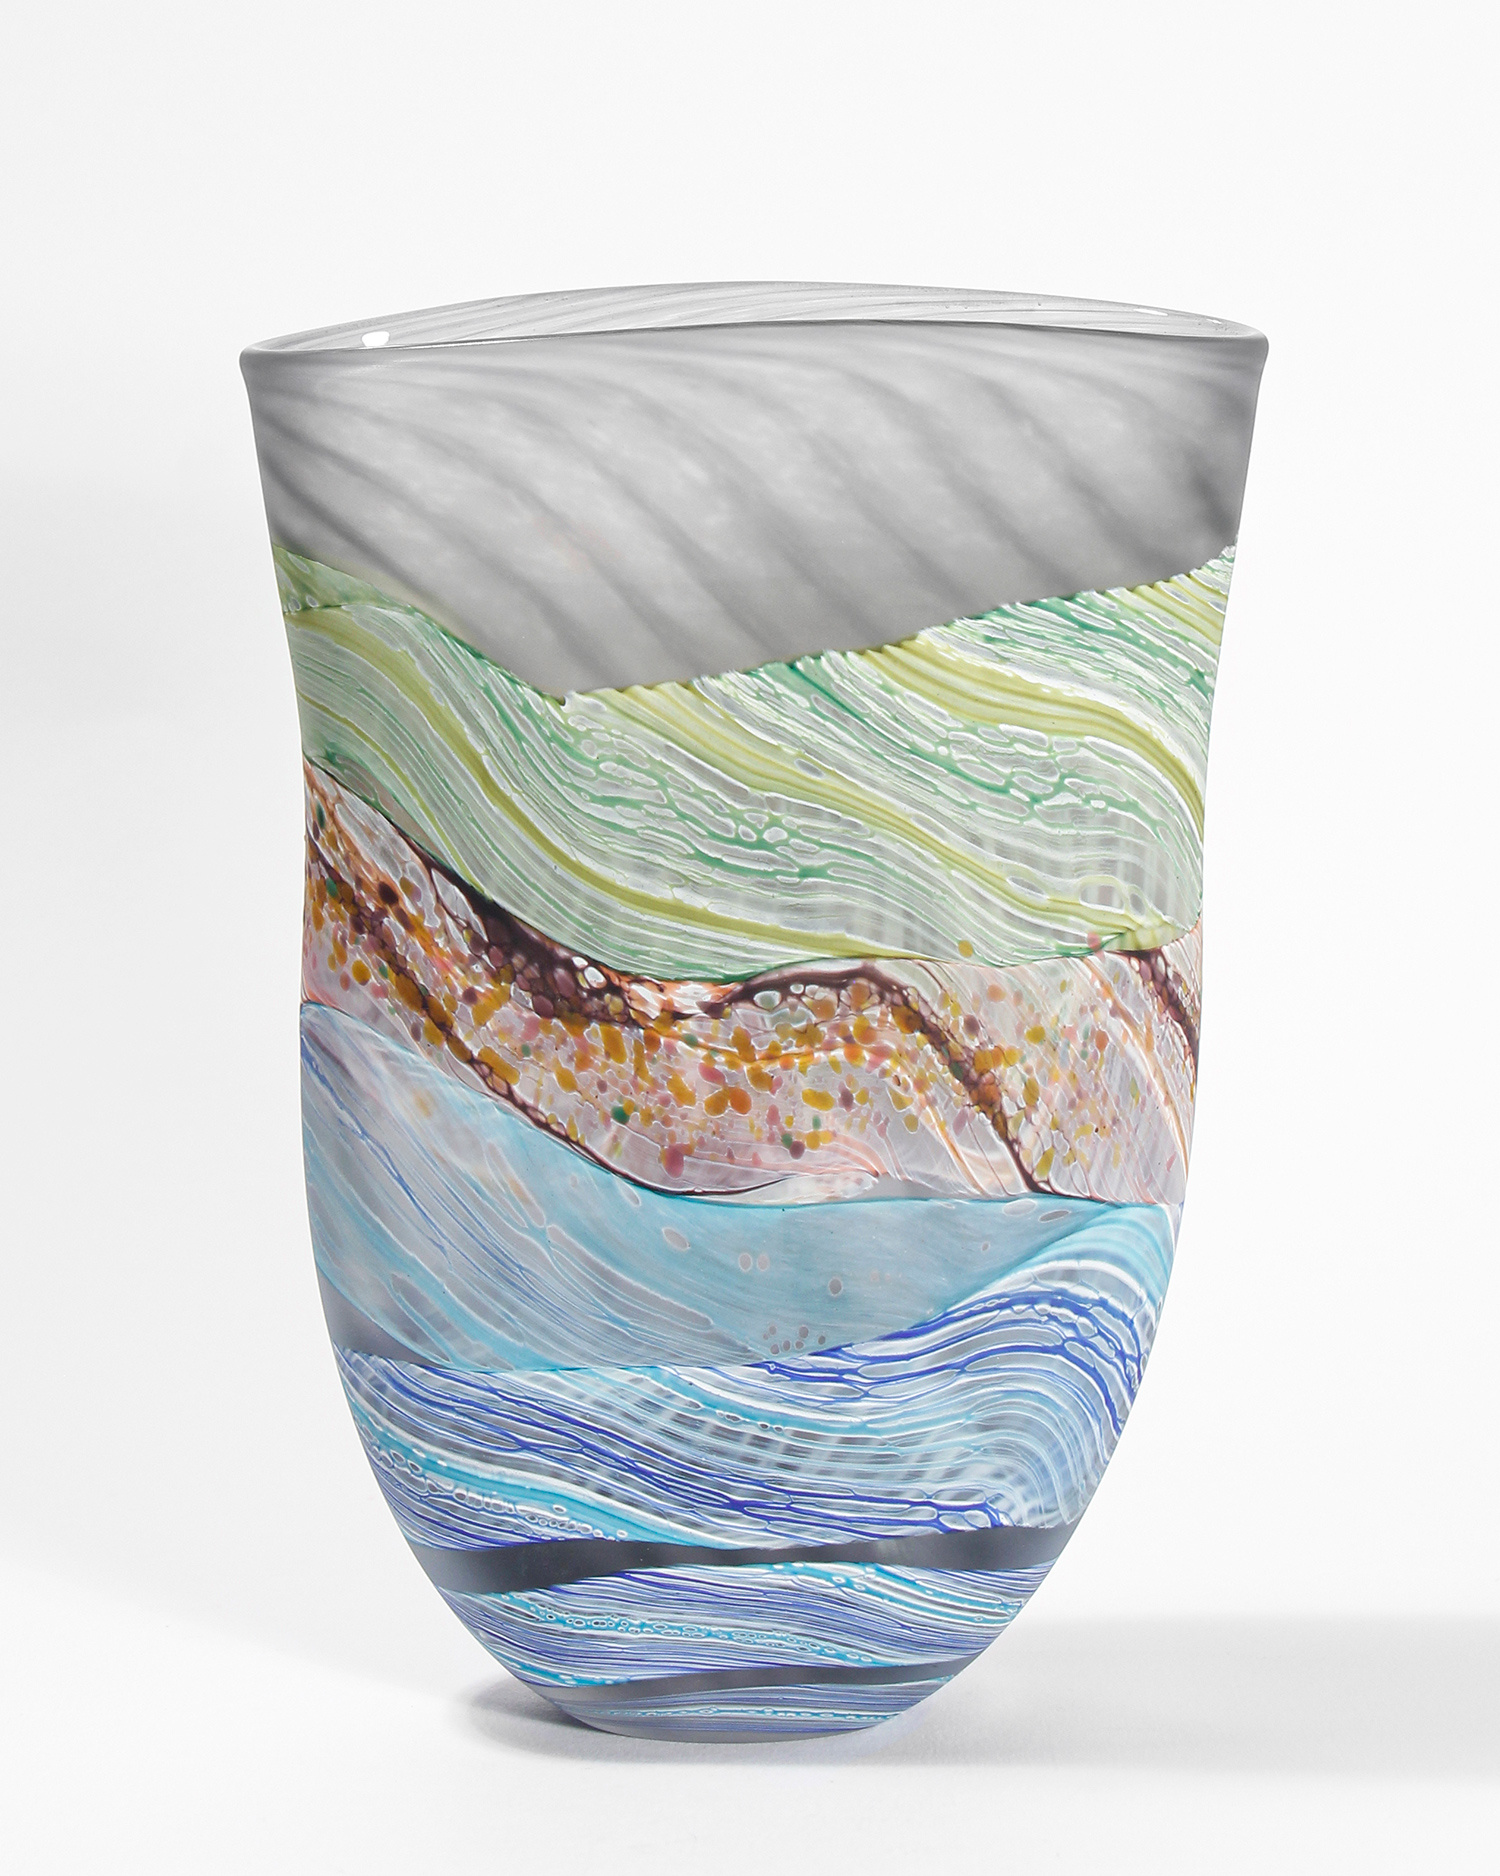 Stormy Skies Flat Vase, small by Thomas Petit